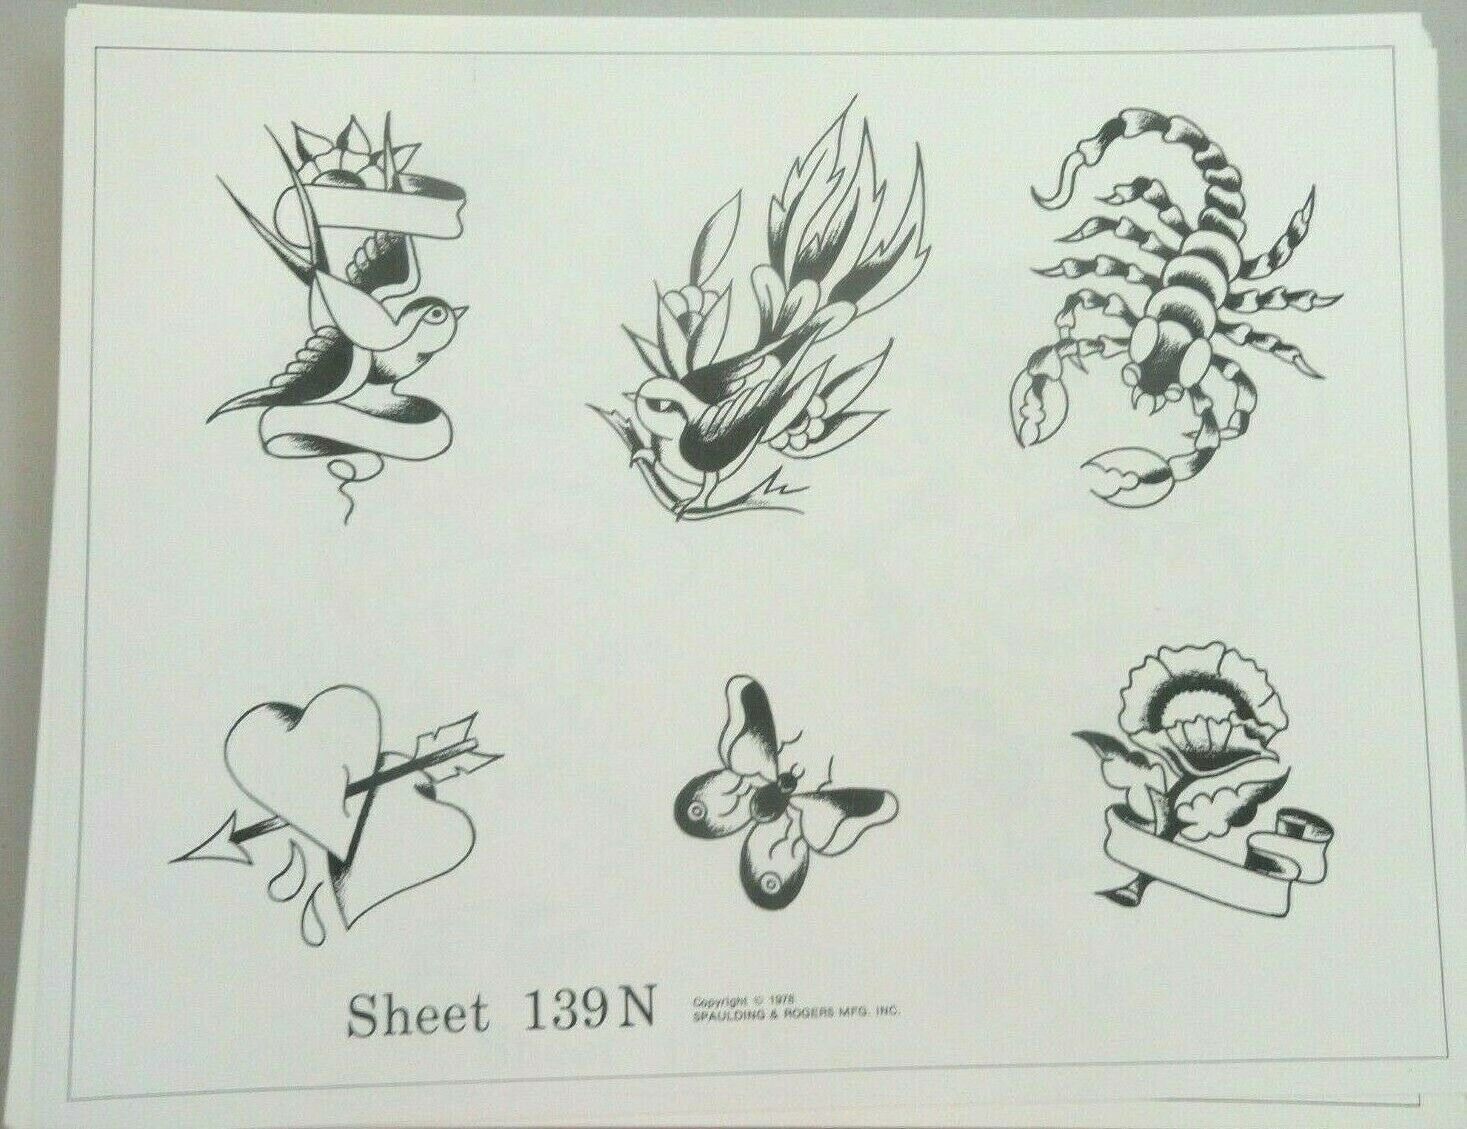 VTG 1978 Spaulding & Rogers Tattoo Flash Sheet 139N Scorpion Birds Hearts Flower